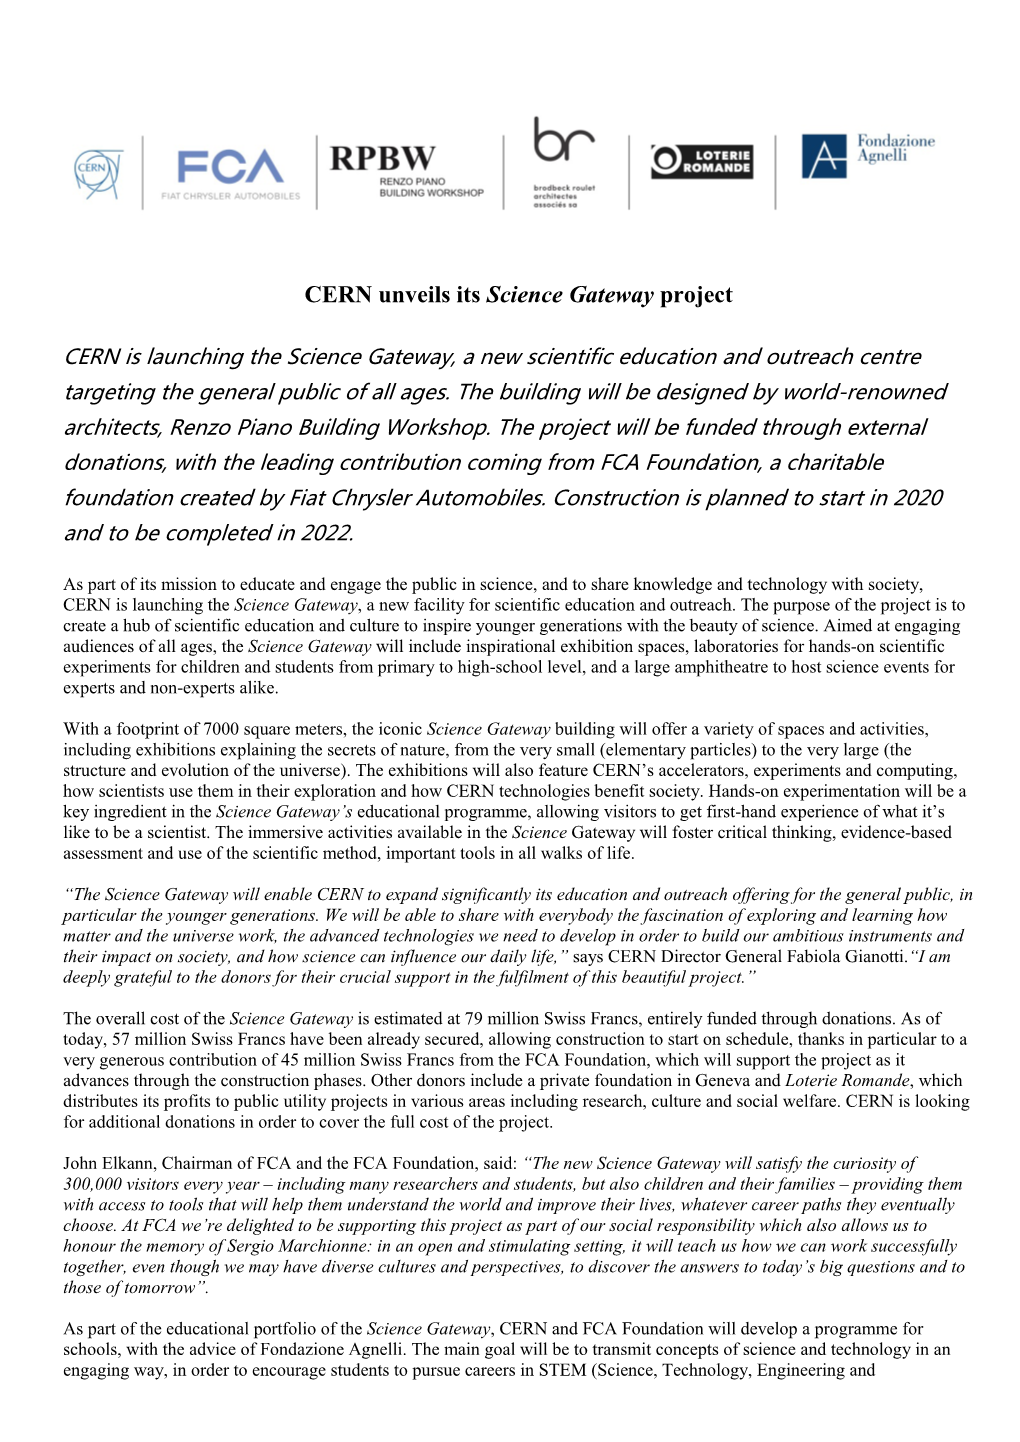 CERN Unveils Its Science Gateway Project